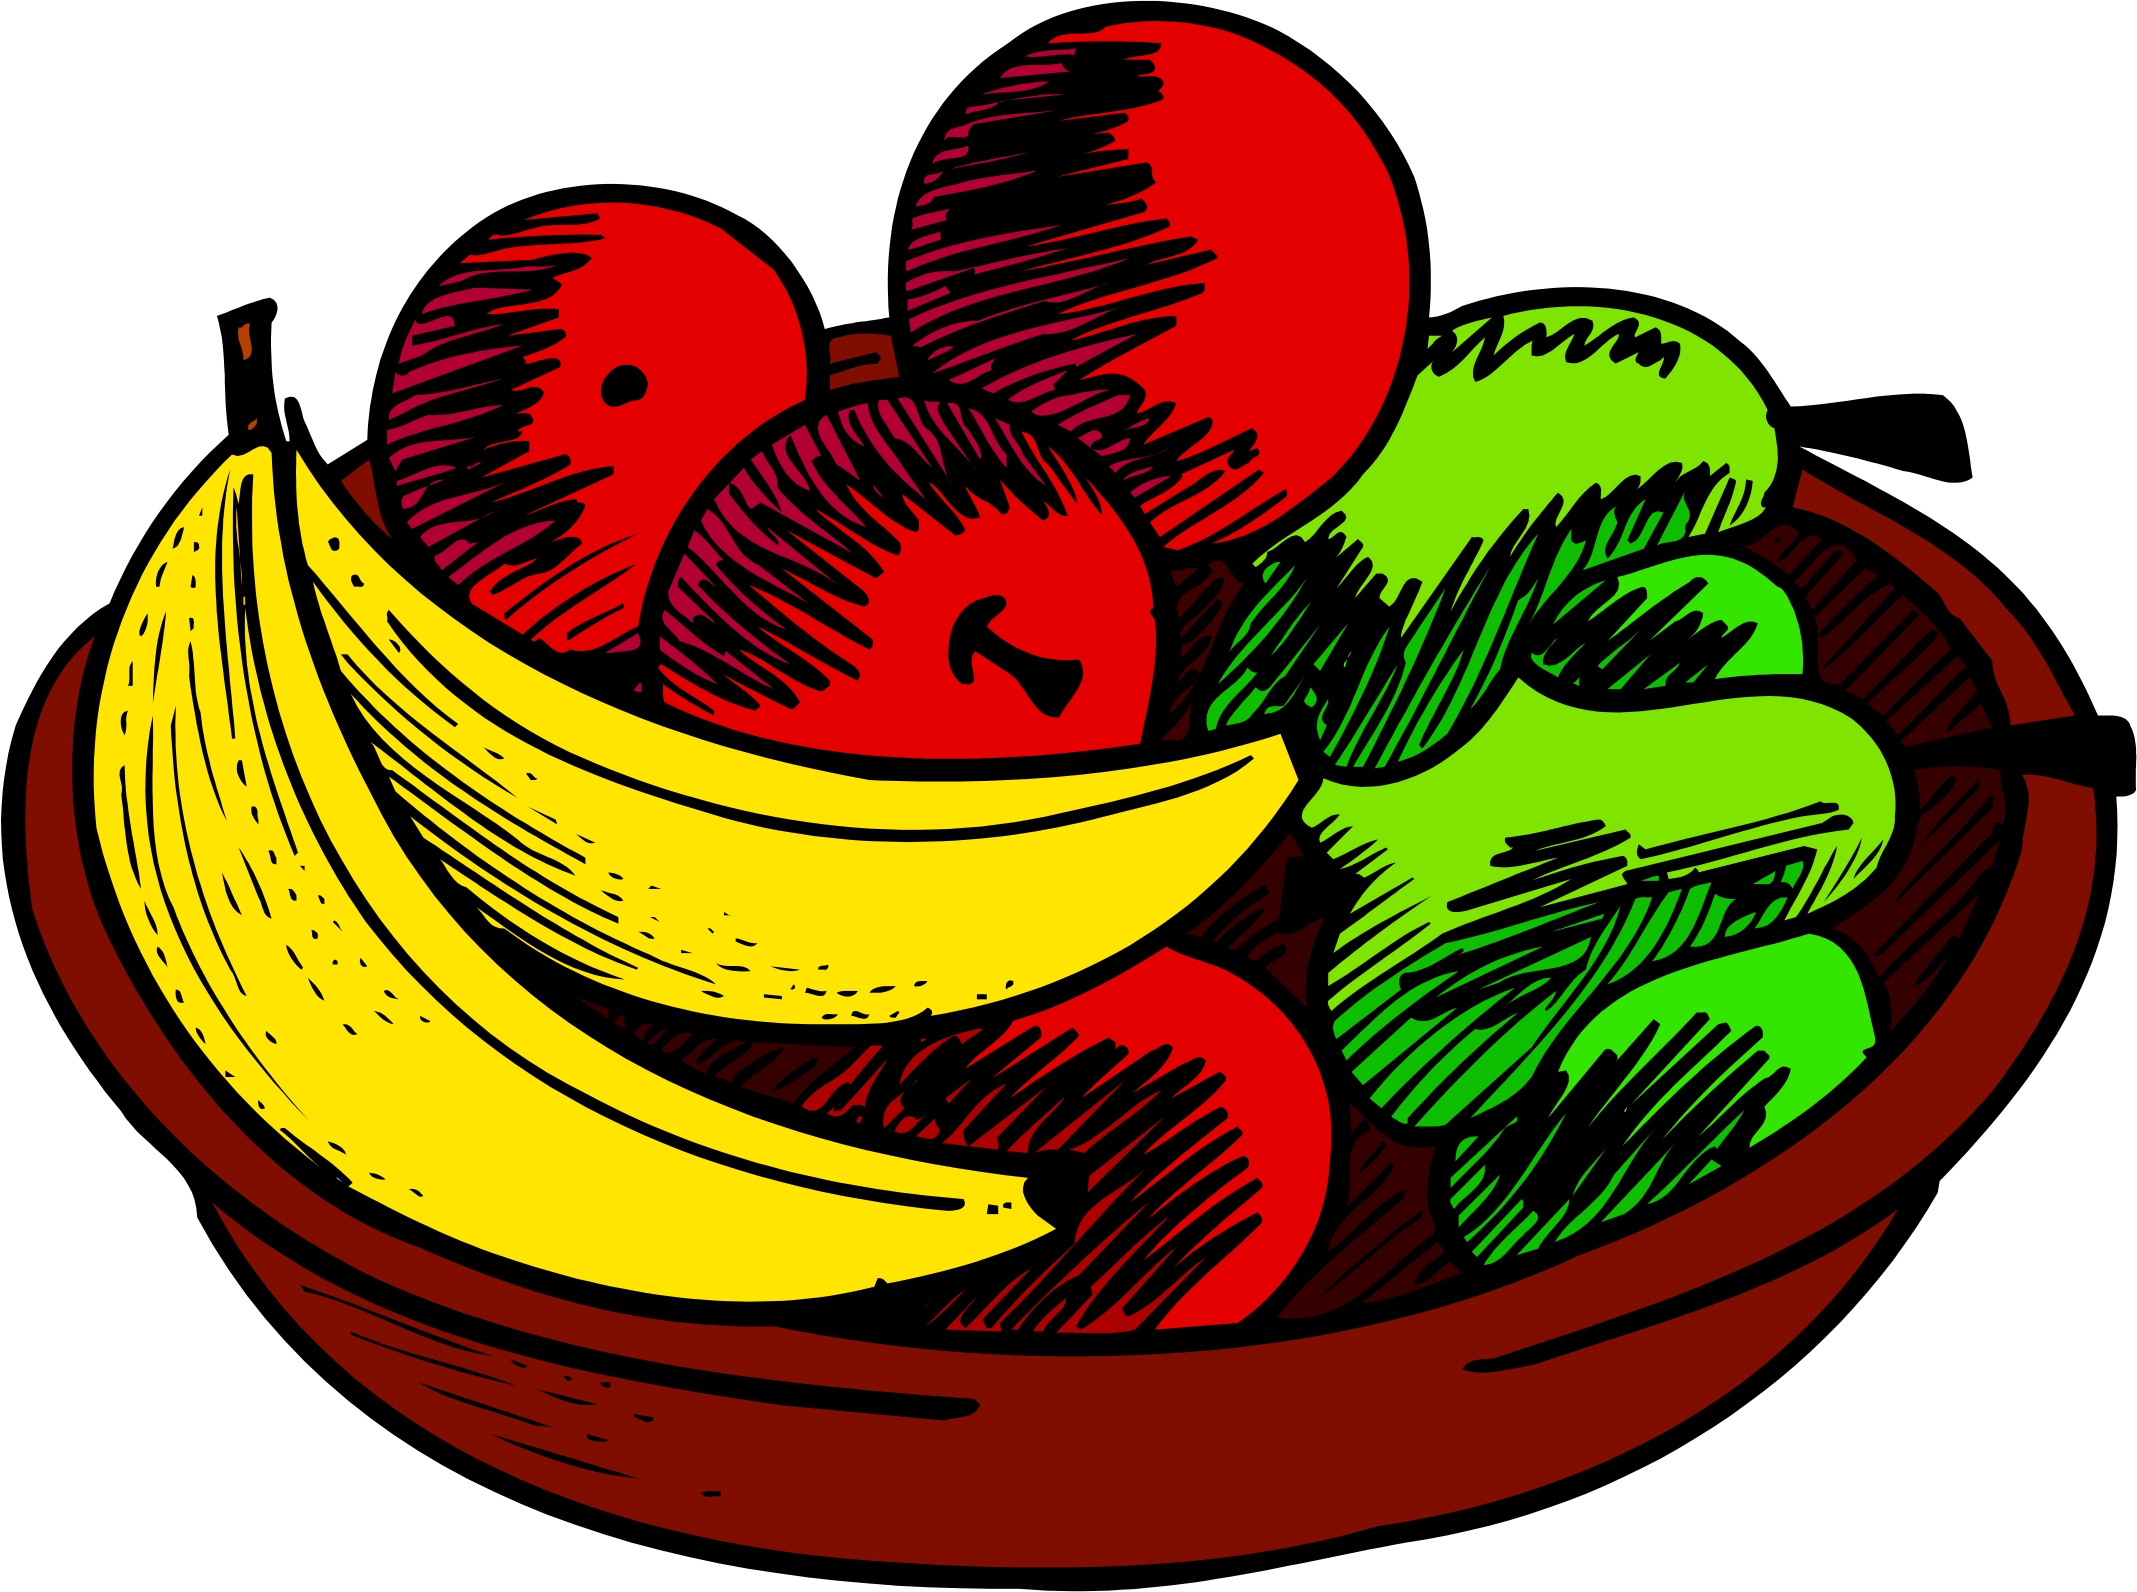 Cartoon Fruit Images